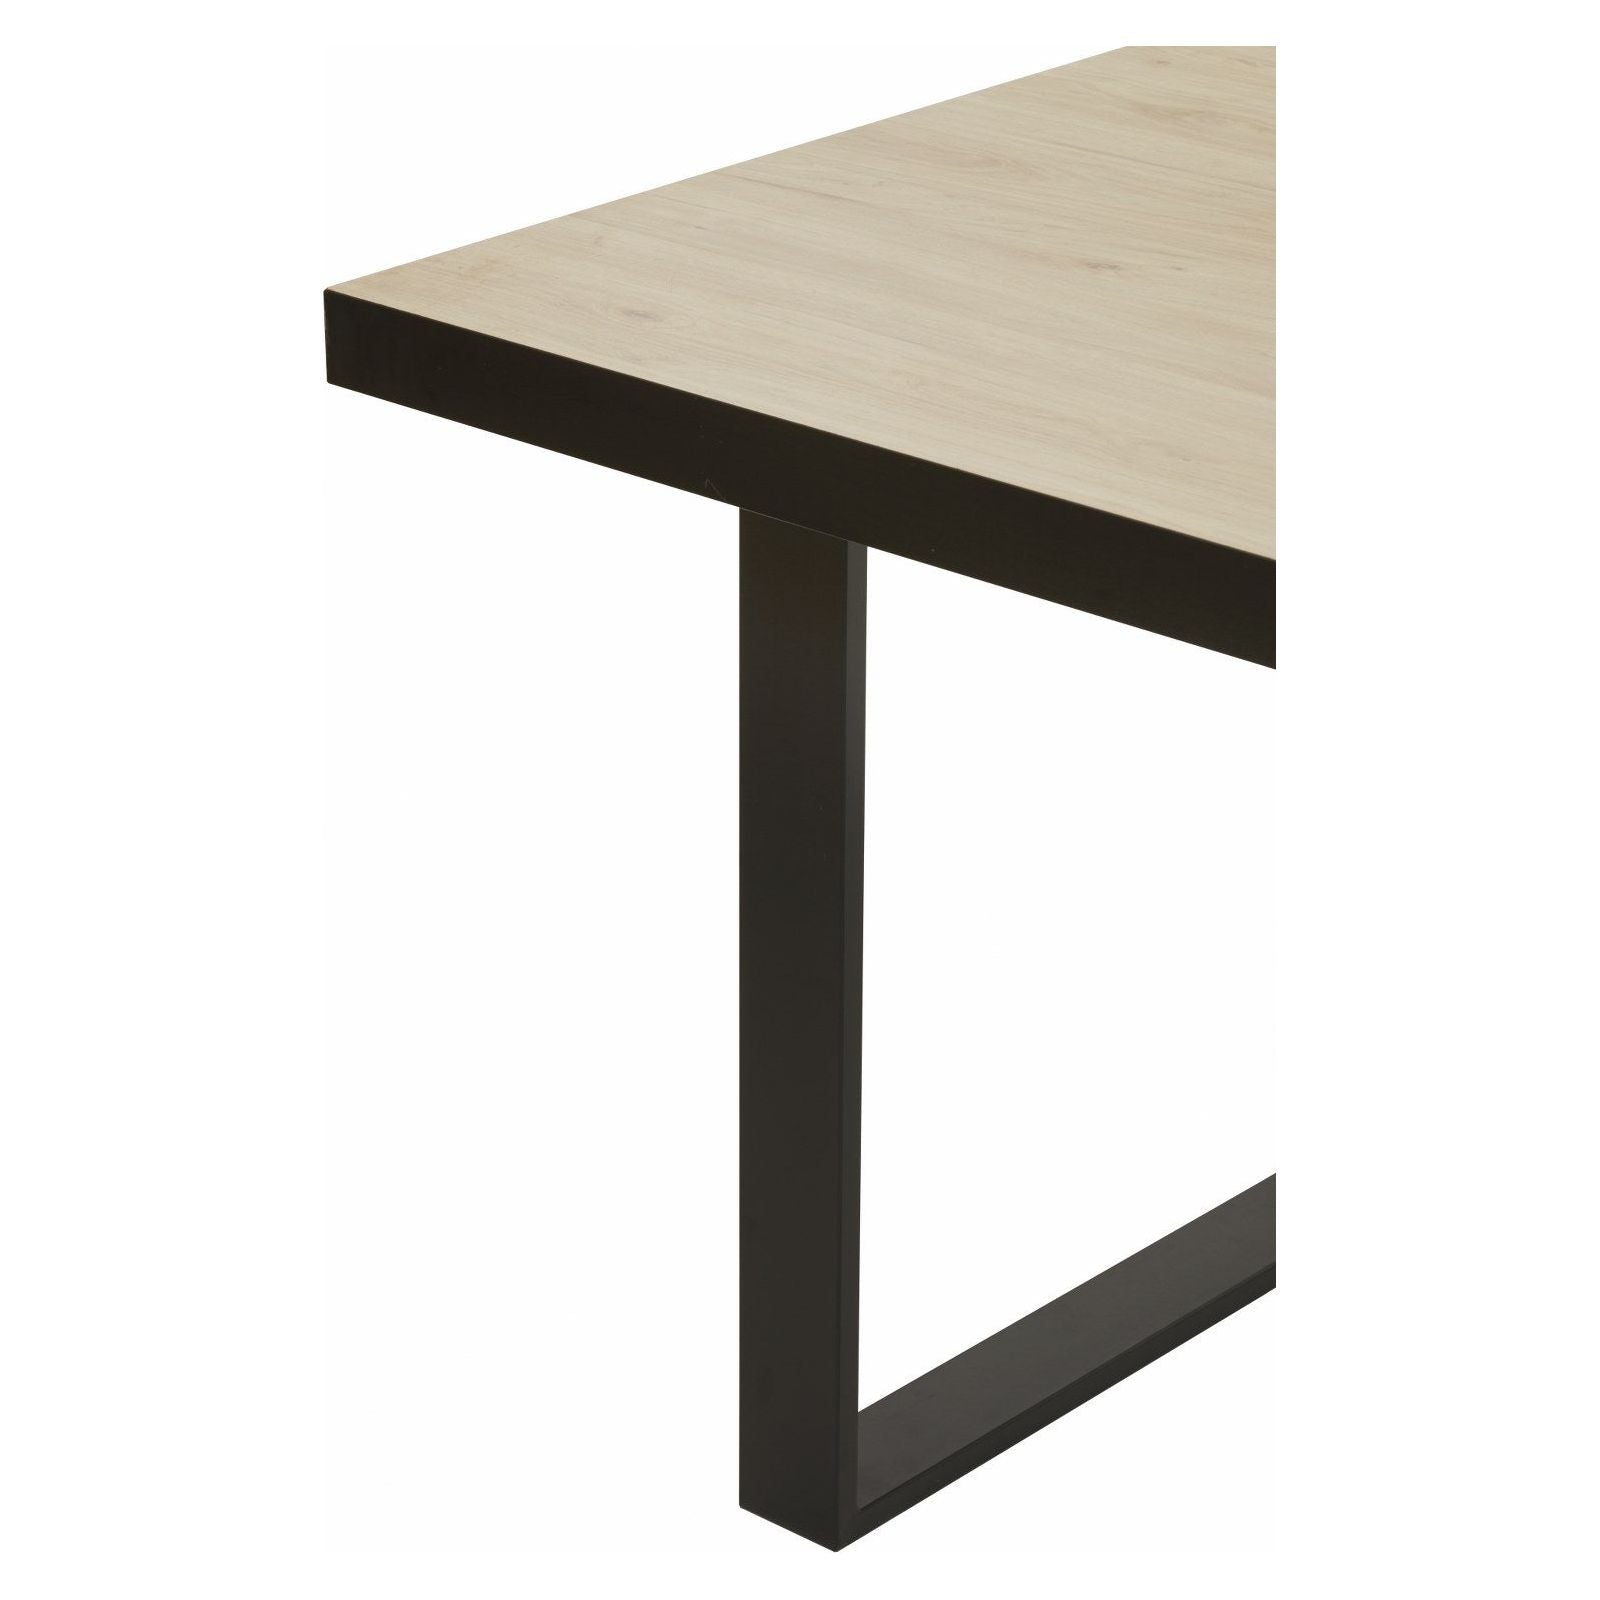 Table | Furniture series Tilly | brown, natural, black